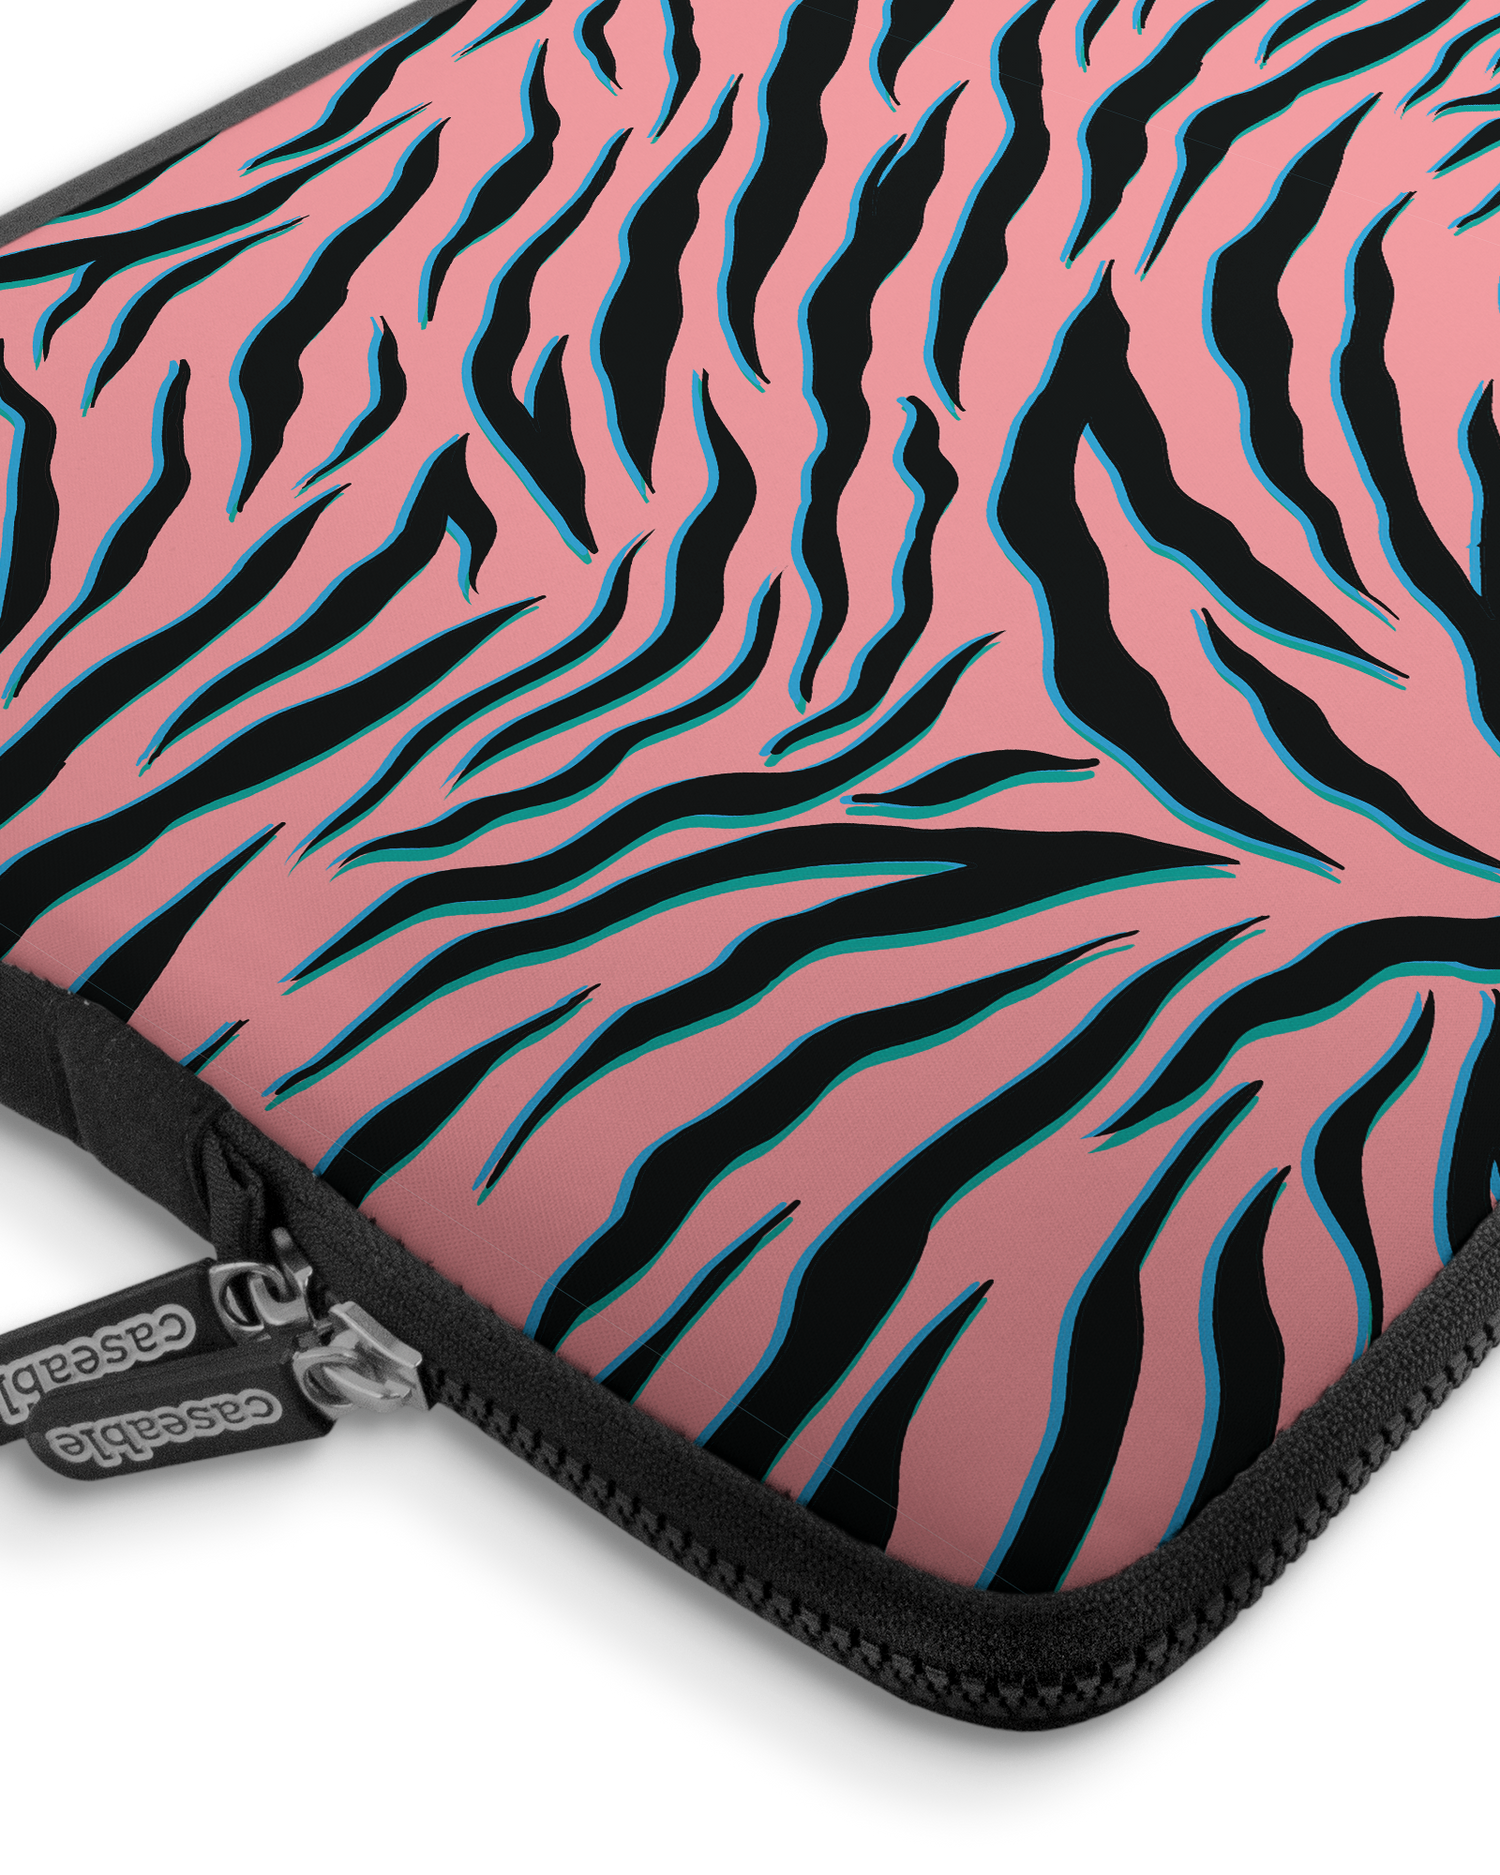 Pink Zebra Premium Laptop Bag 17 inch with device inside